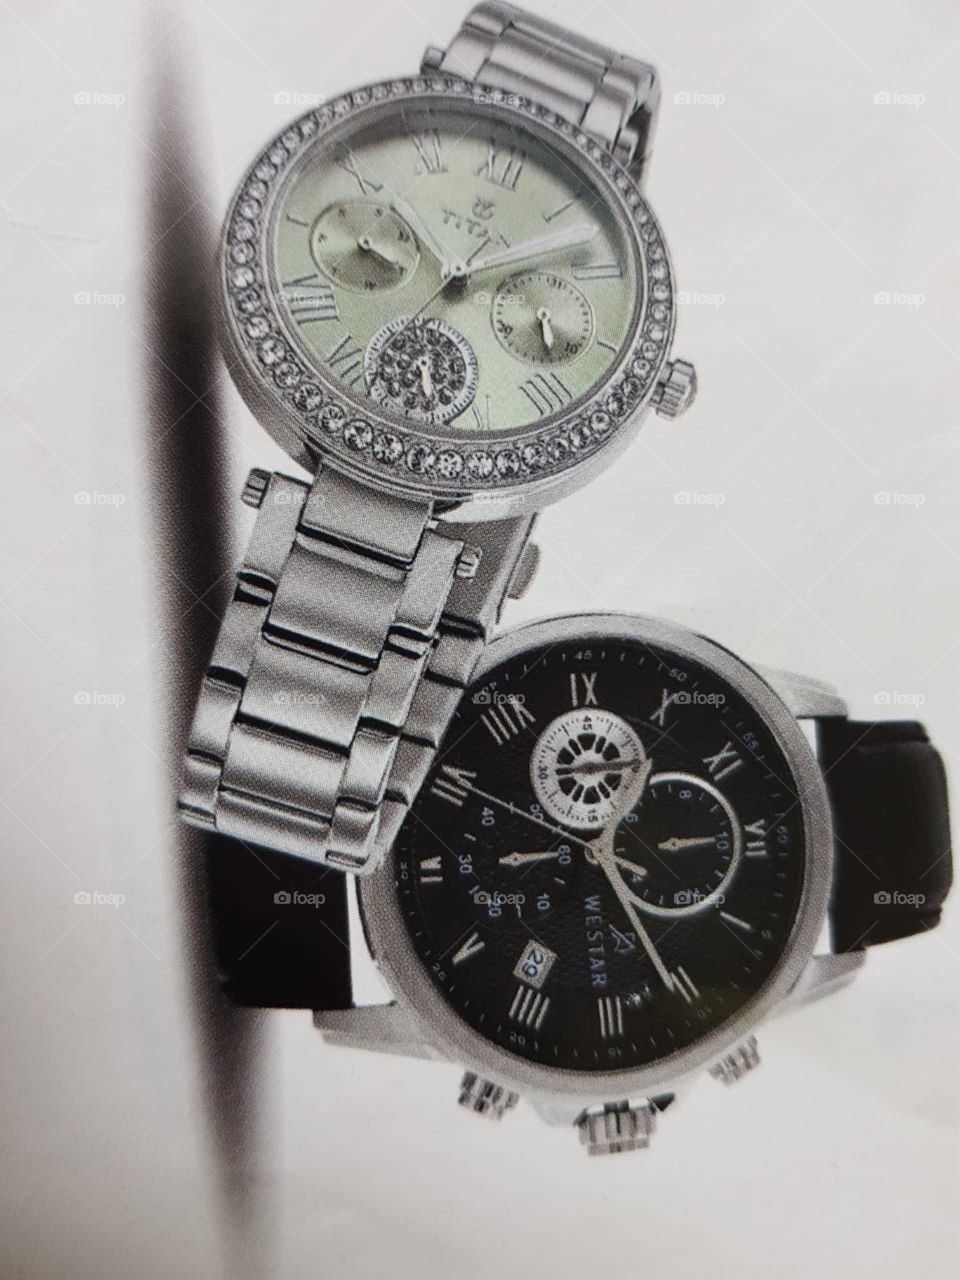 Nice and beautiful wrist watches.